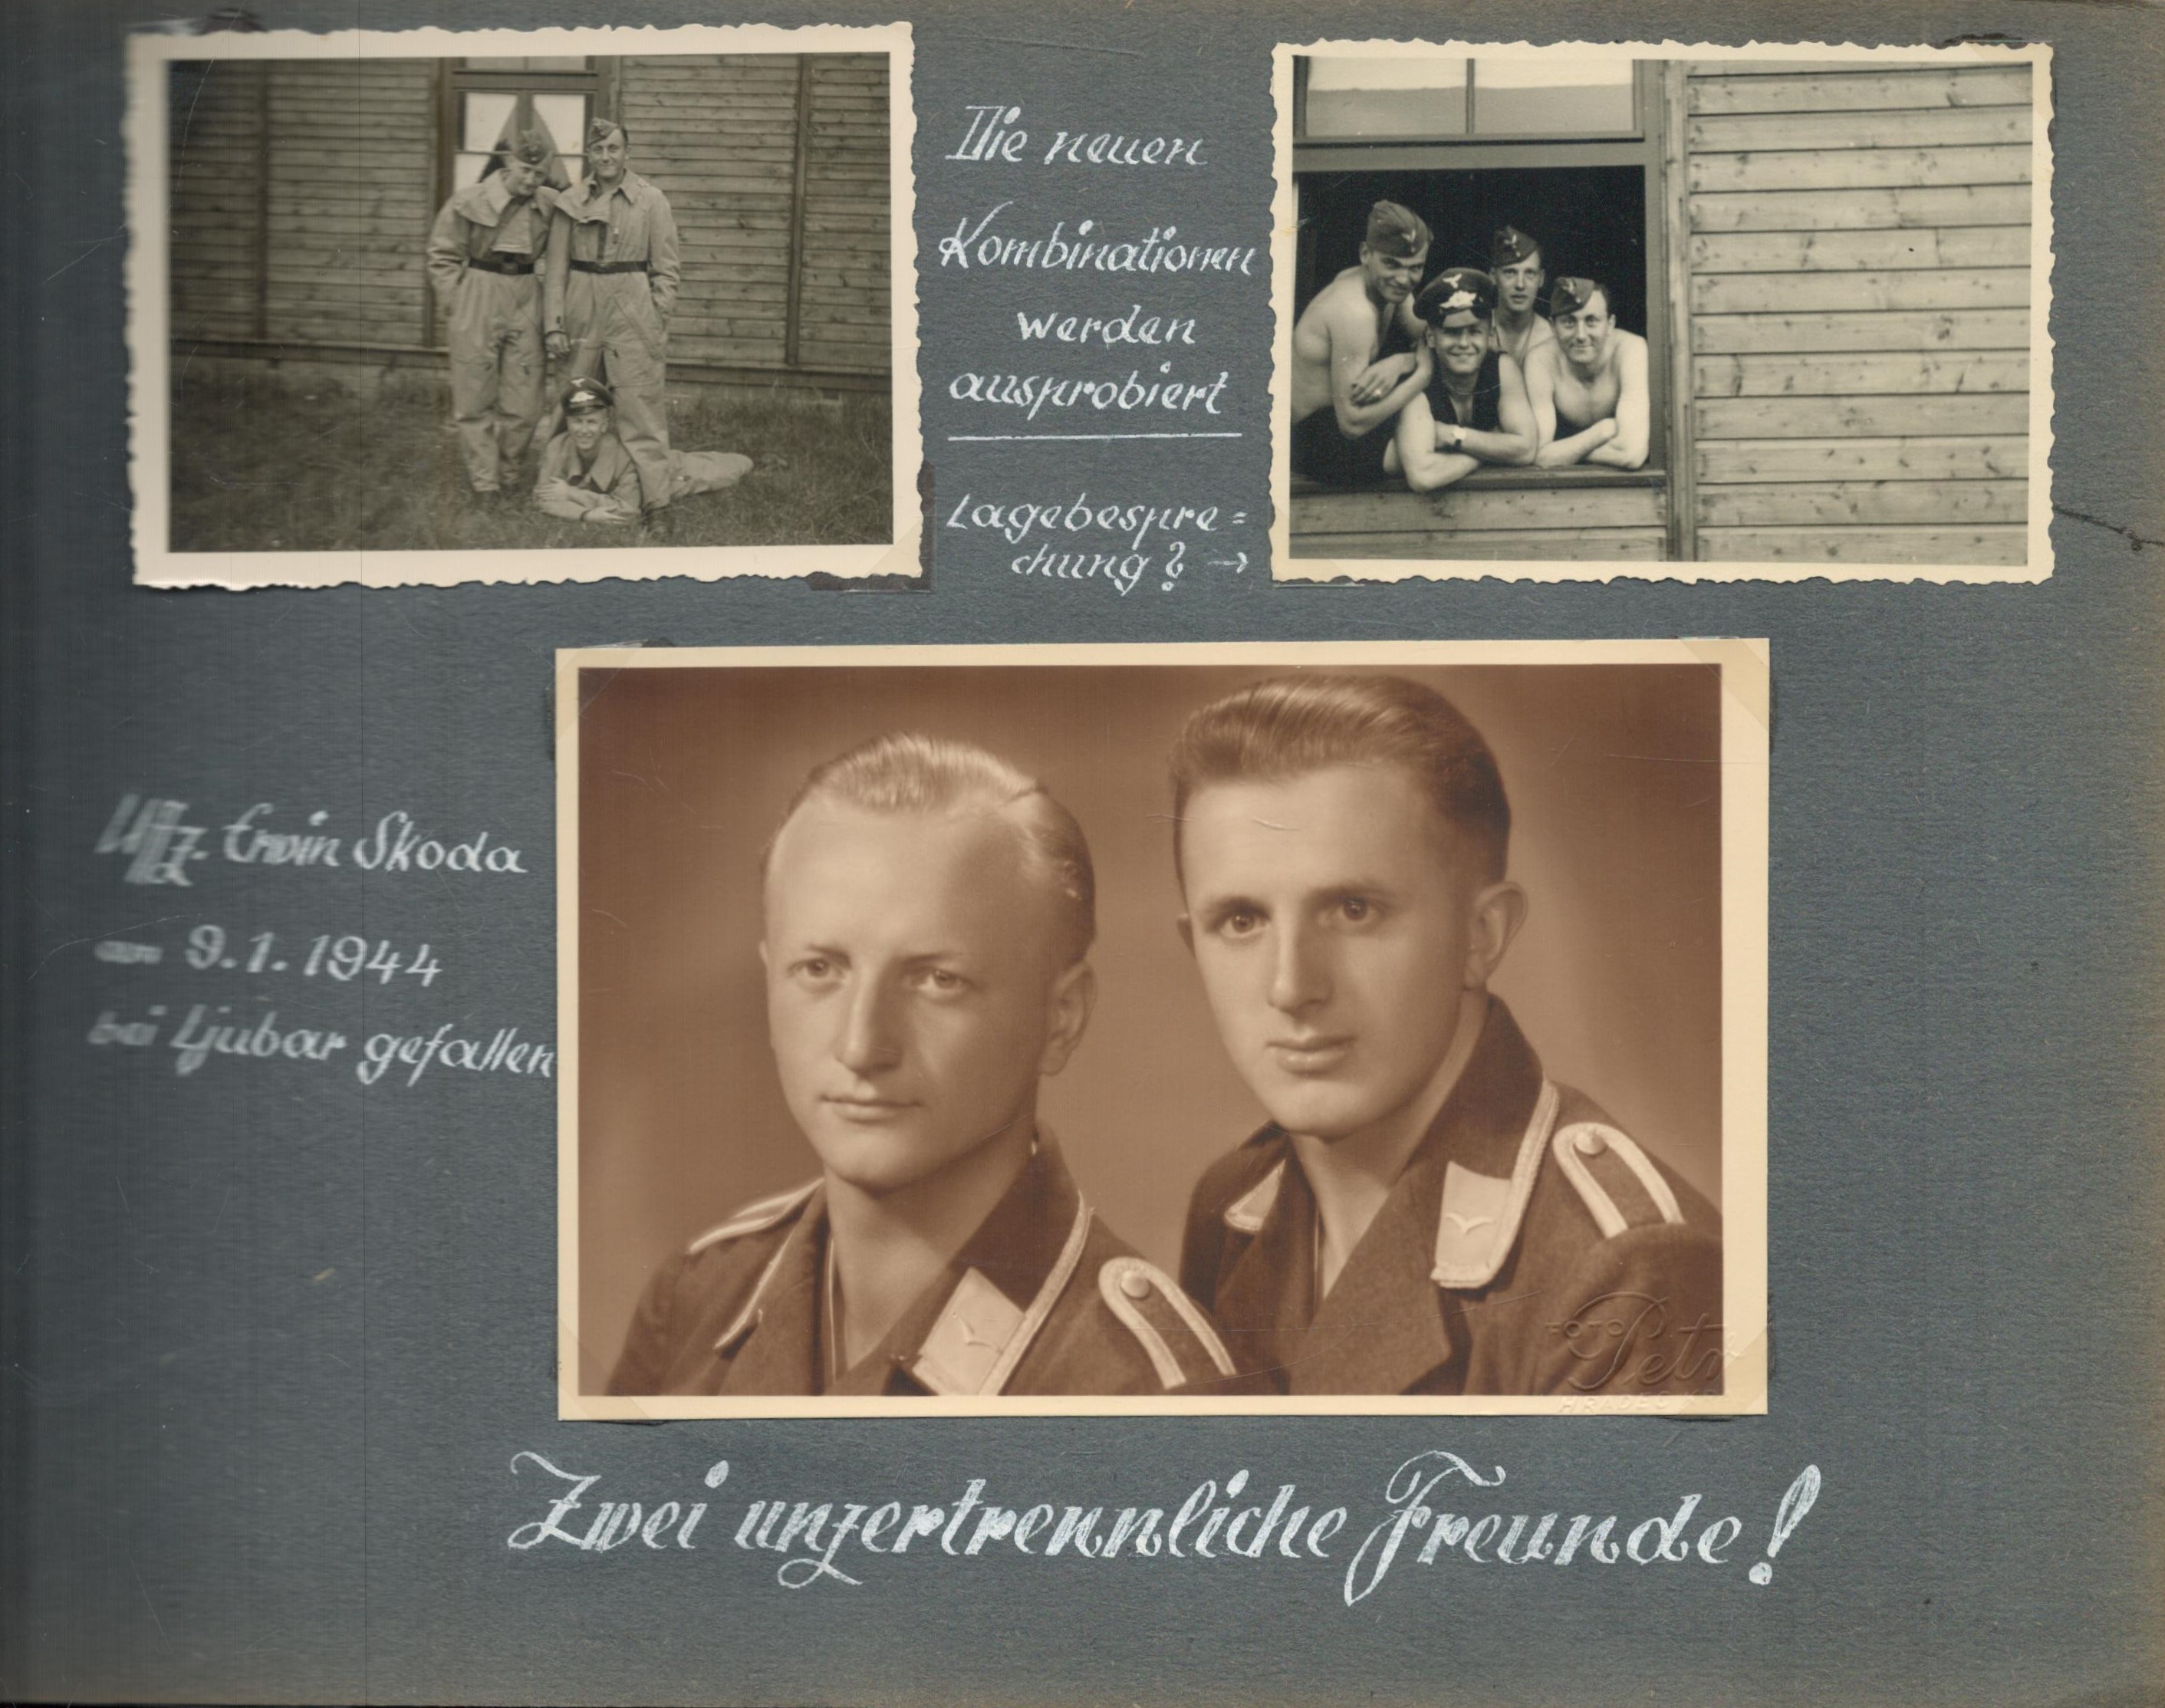 Luftwaffe Stuka Operator photo album of the career and war memories of Erich Heine rear gunner and - Image 3 of 4